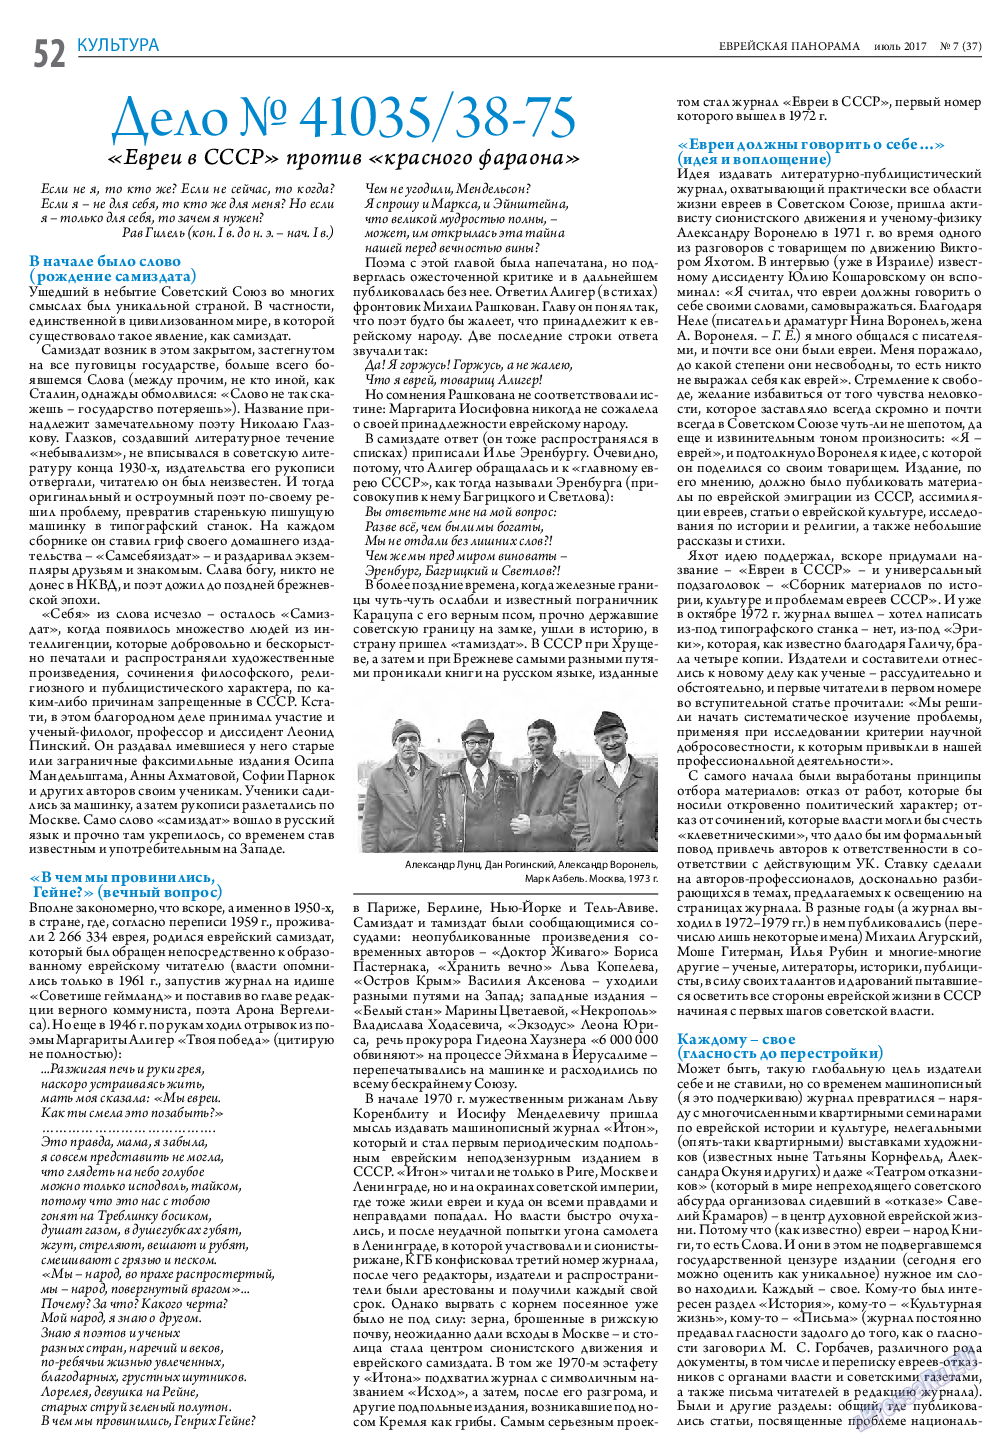 Еврейская панорама, газета. 2017 №7 стр.52